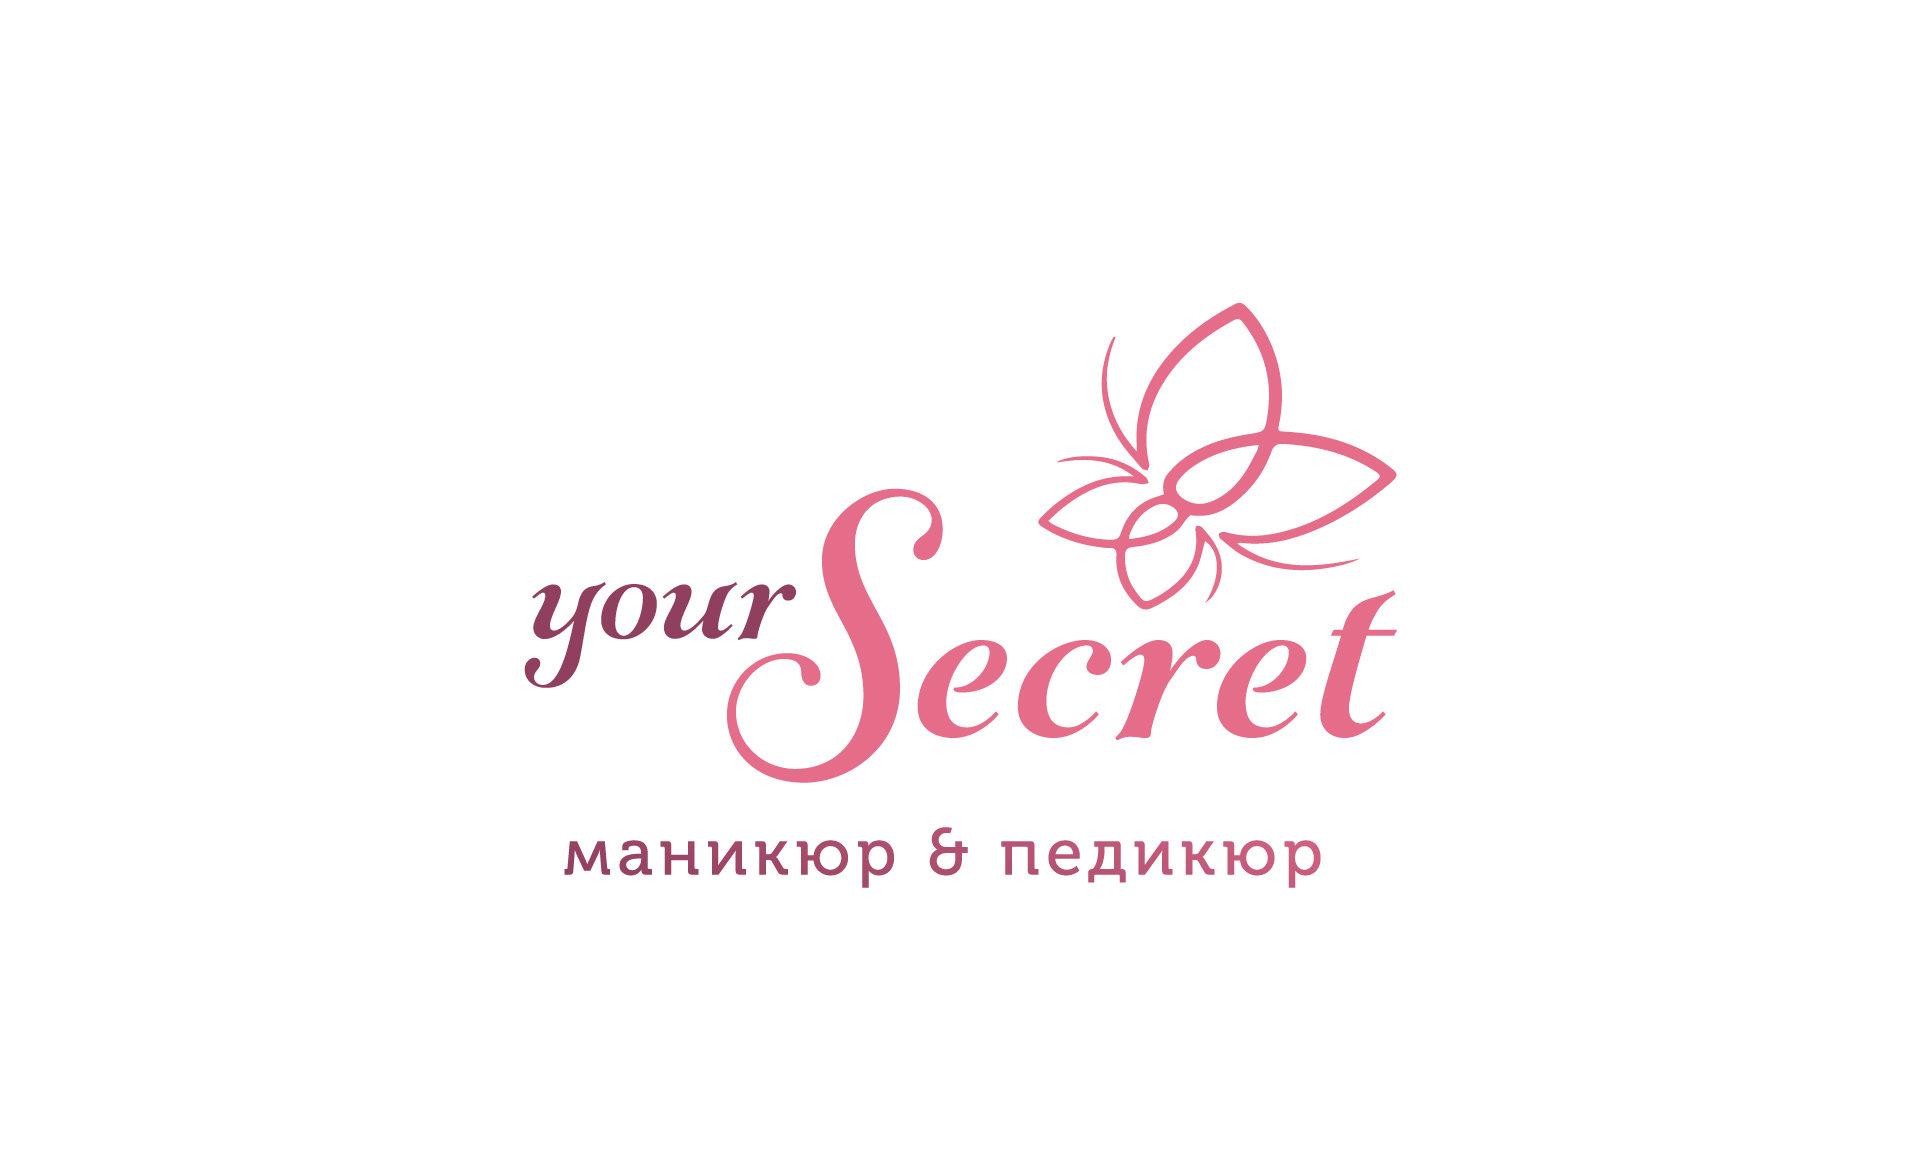 Салон красоты секрет москва. Салон секрет. Бьюти Сикрет Москва салон. Прайс маникюрного салона.